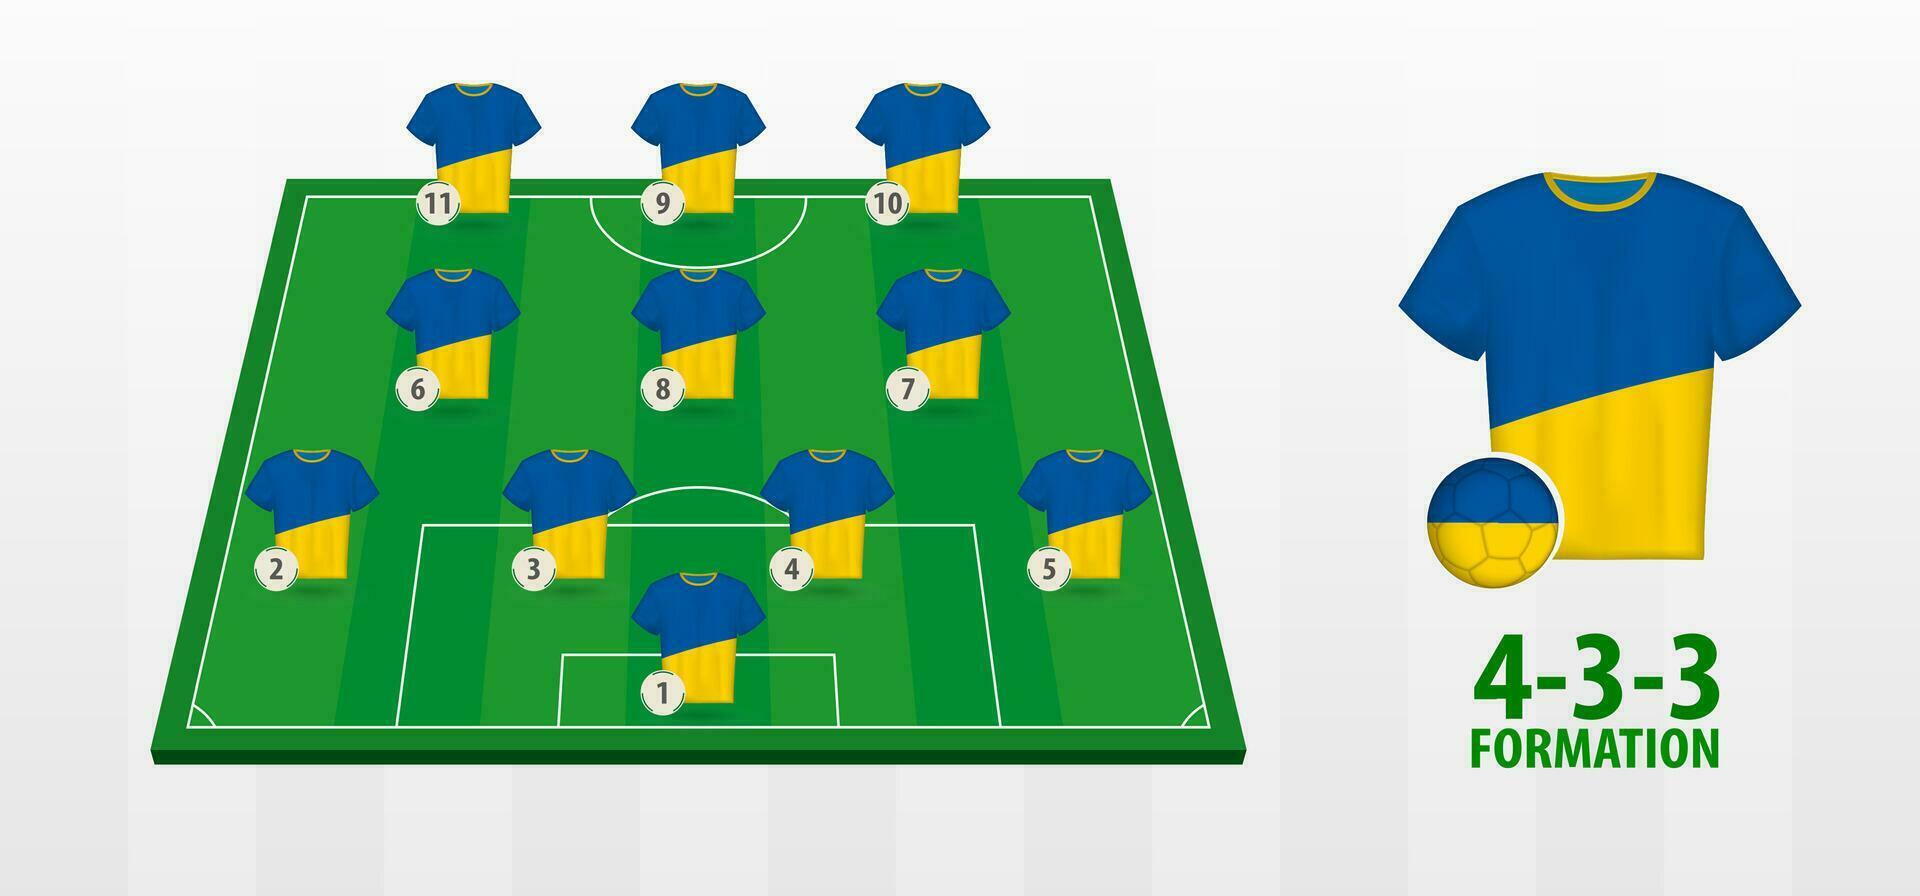 Ukraine National Football Team Formation on Football Field. vector